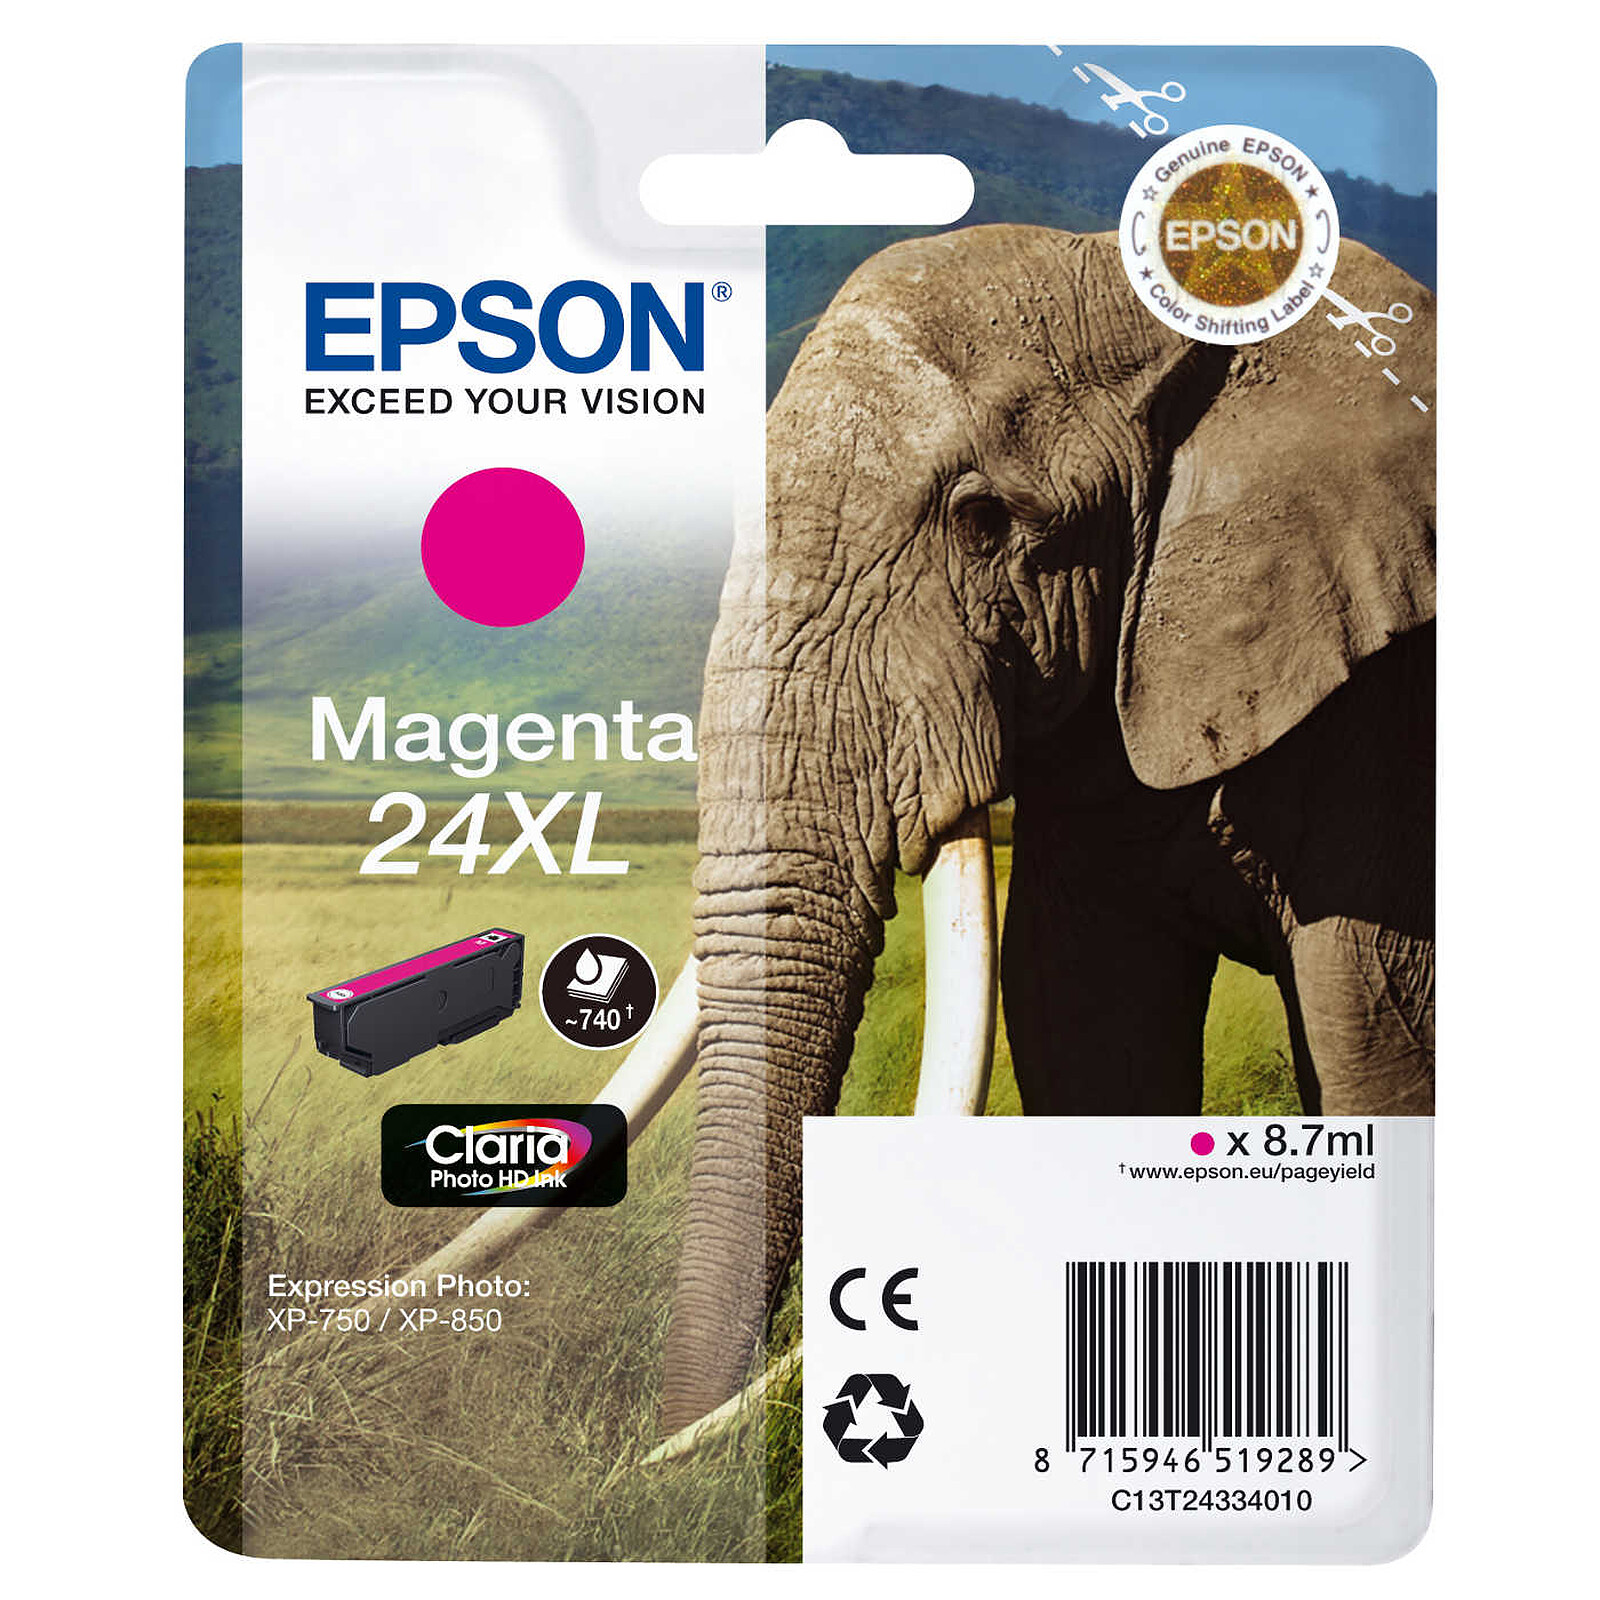 Epson Singlepack Lunettes 408 Magenta - Cartouche imprimante - LDLC